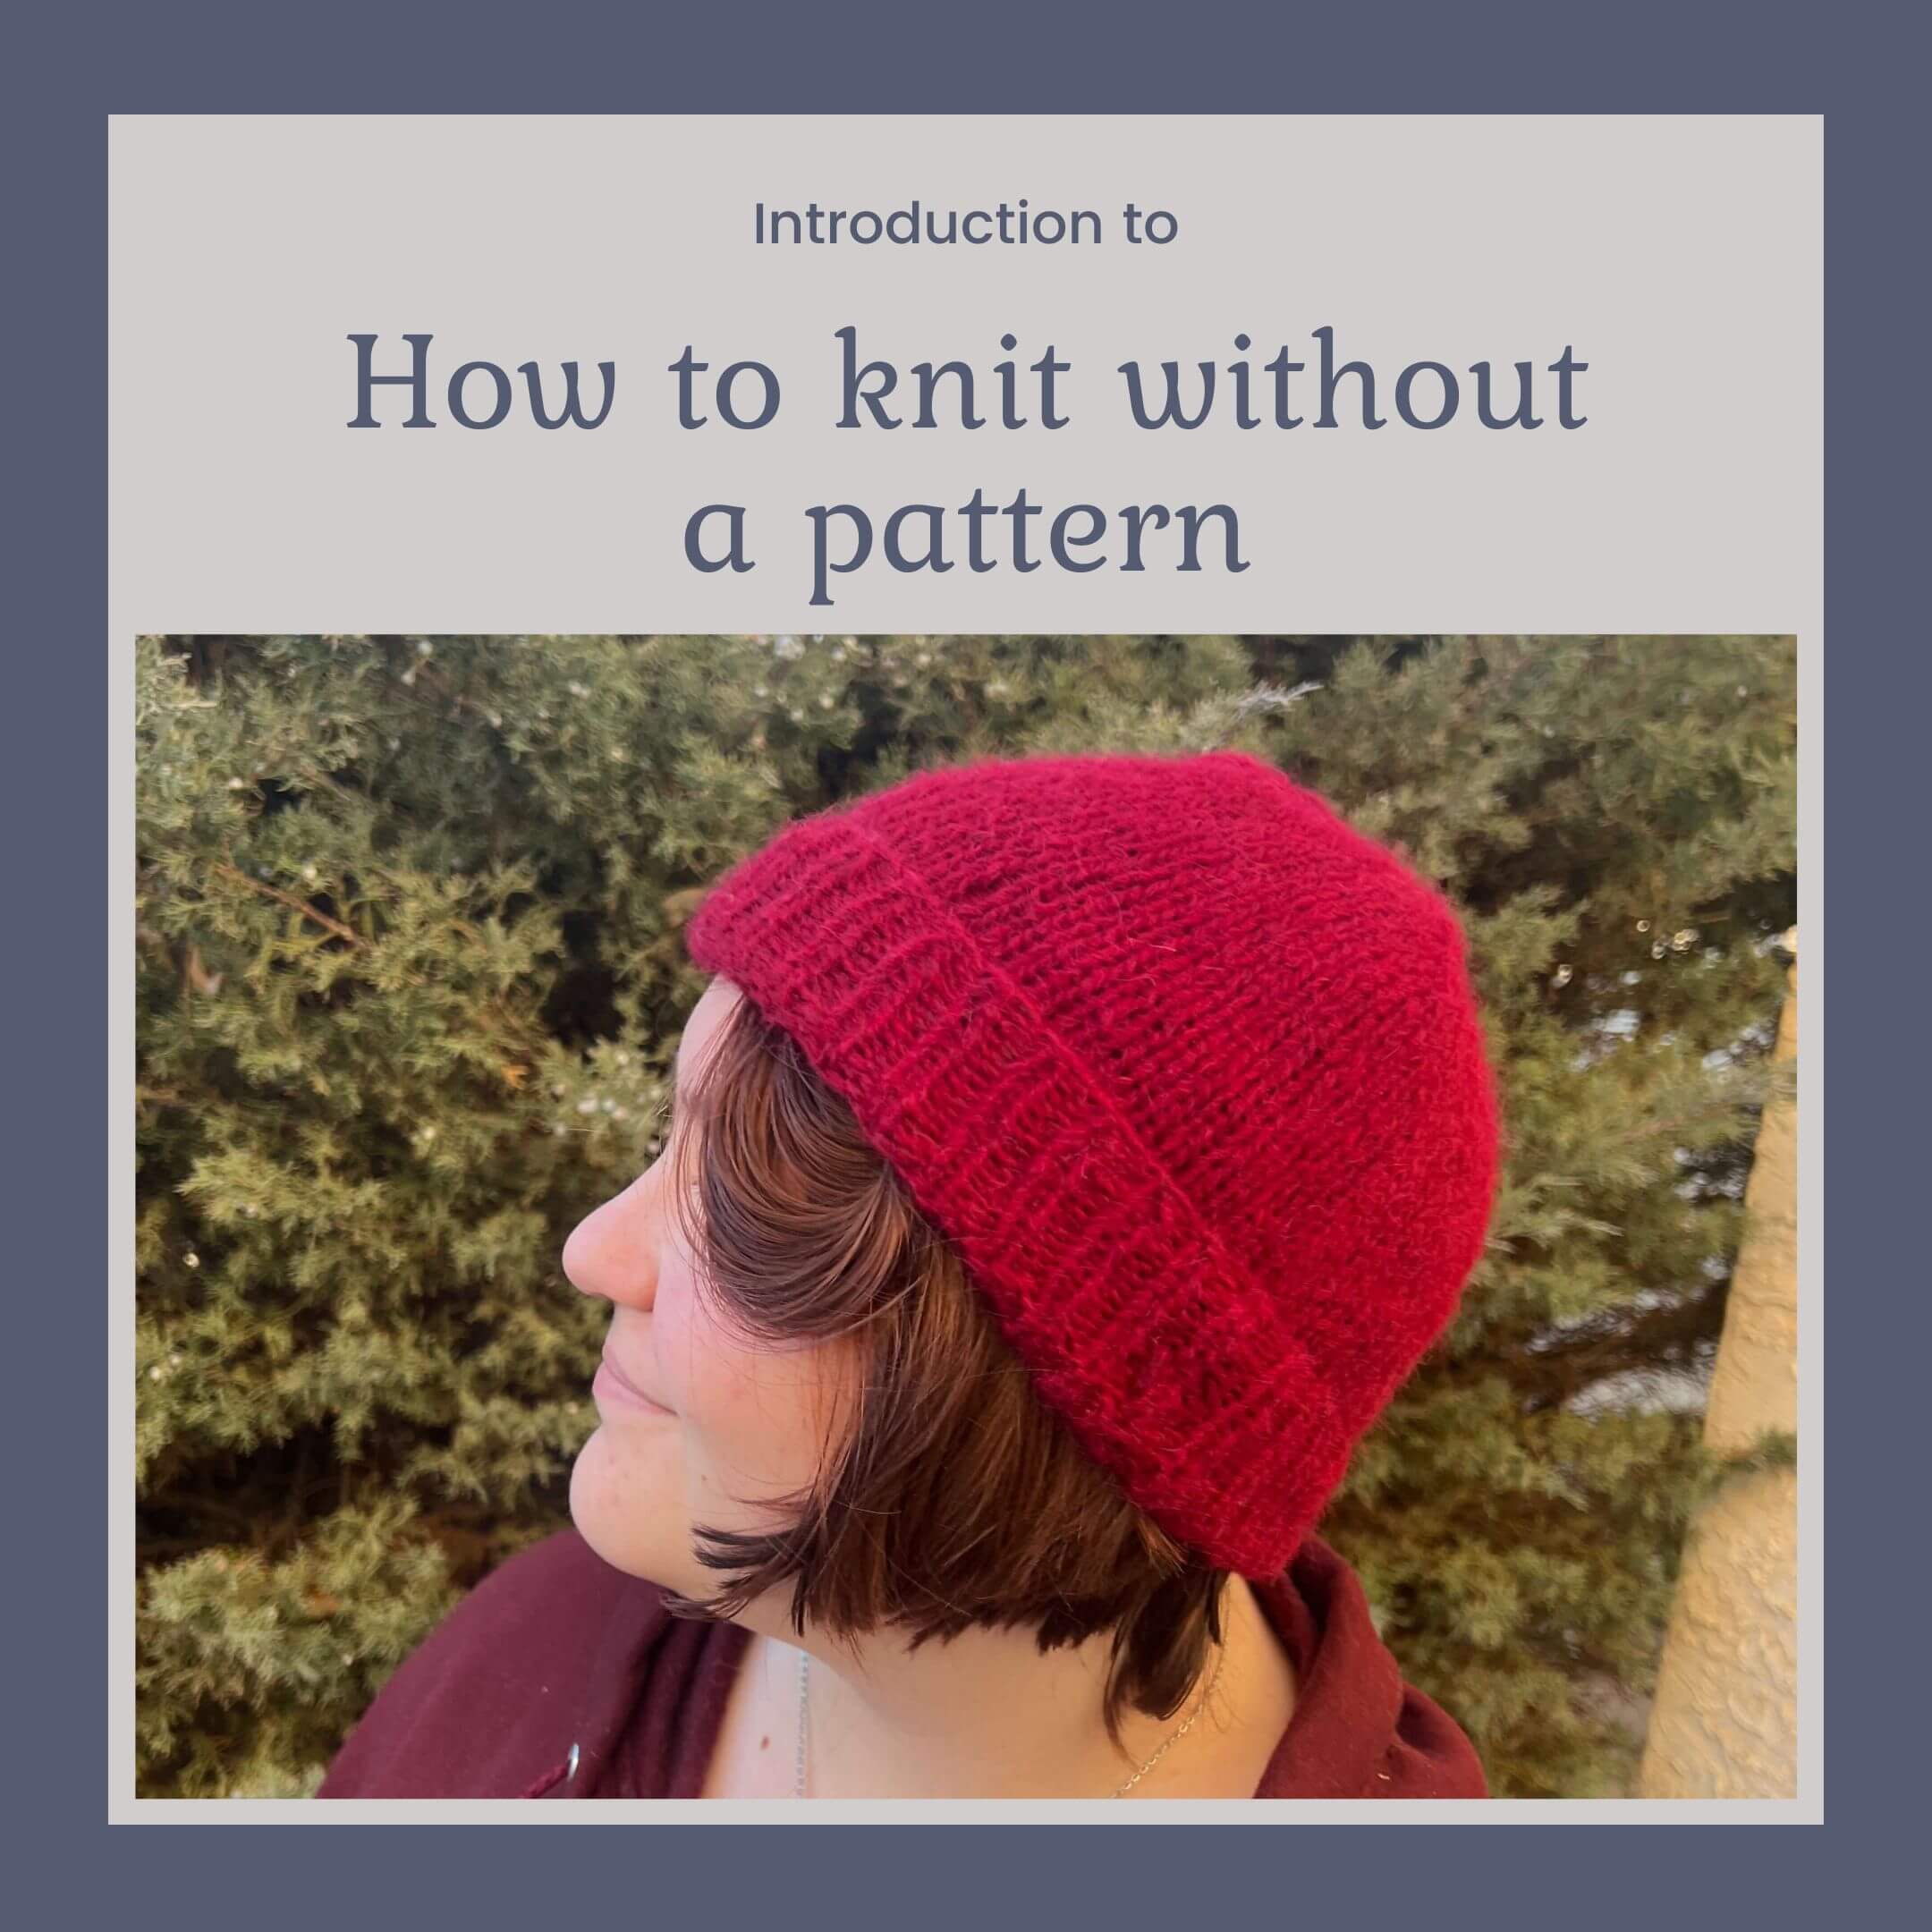 Knit without a pattern